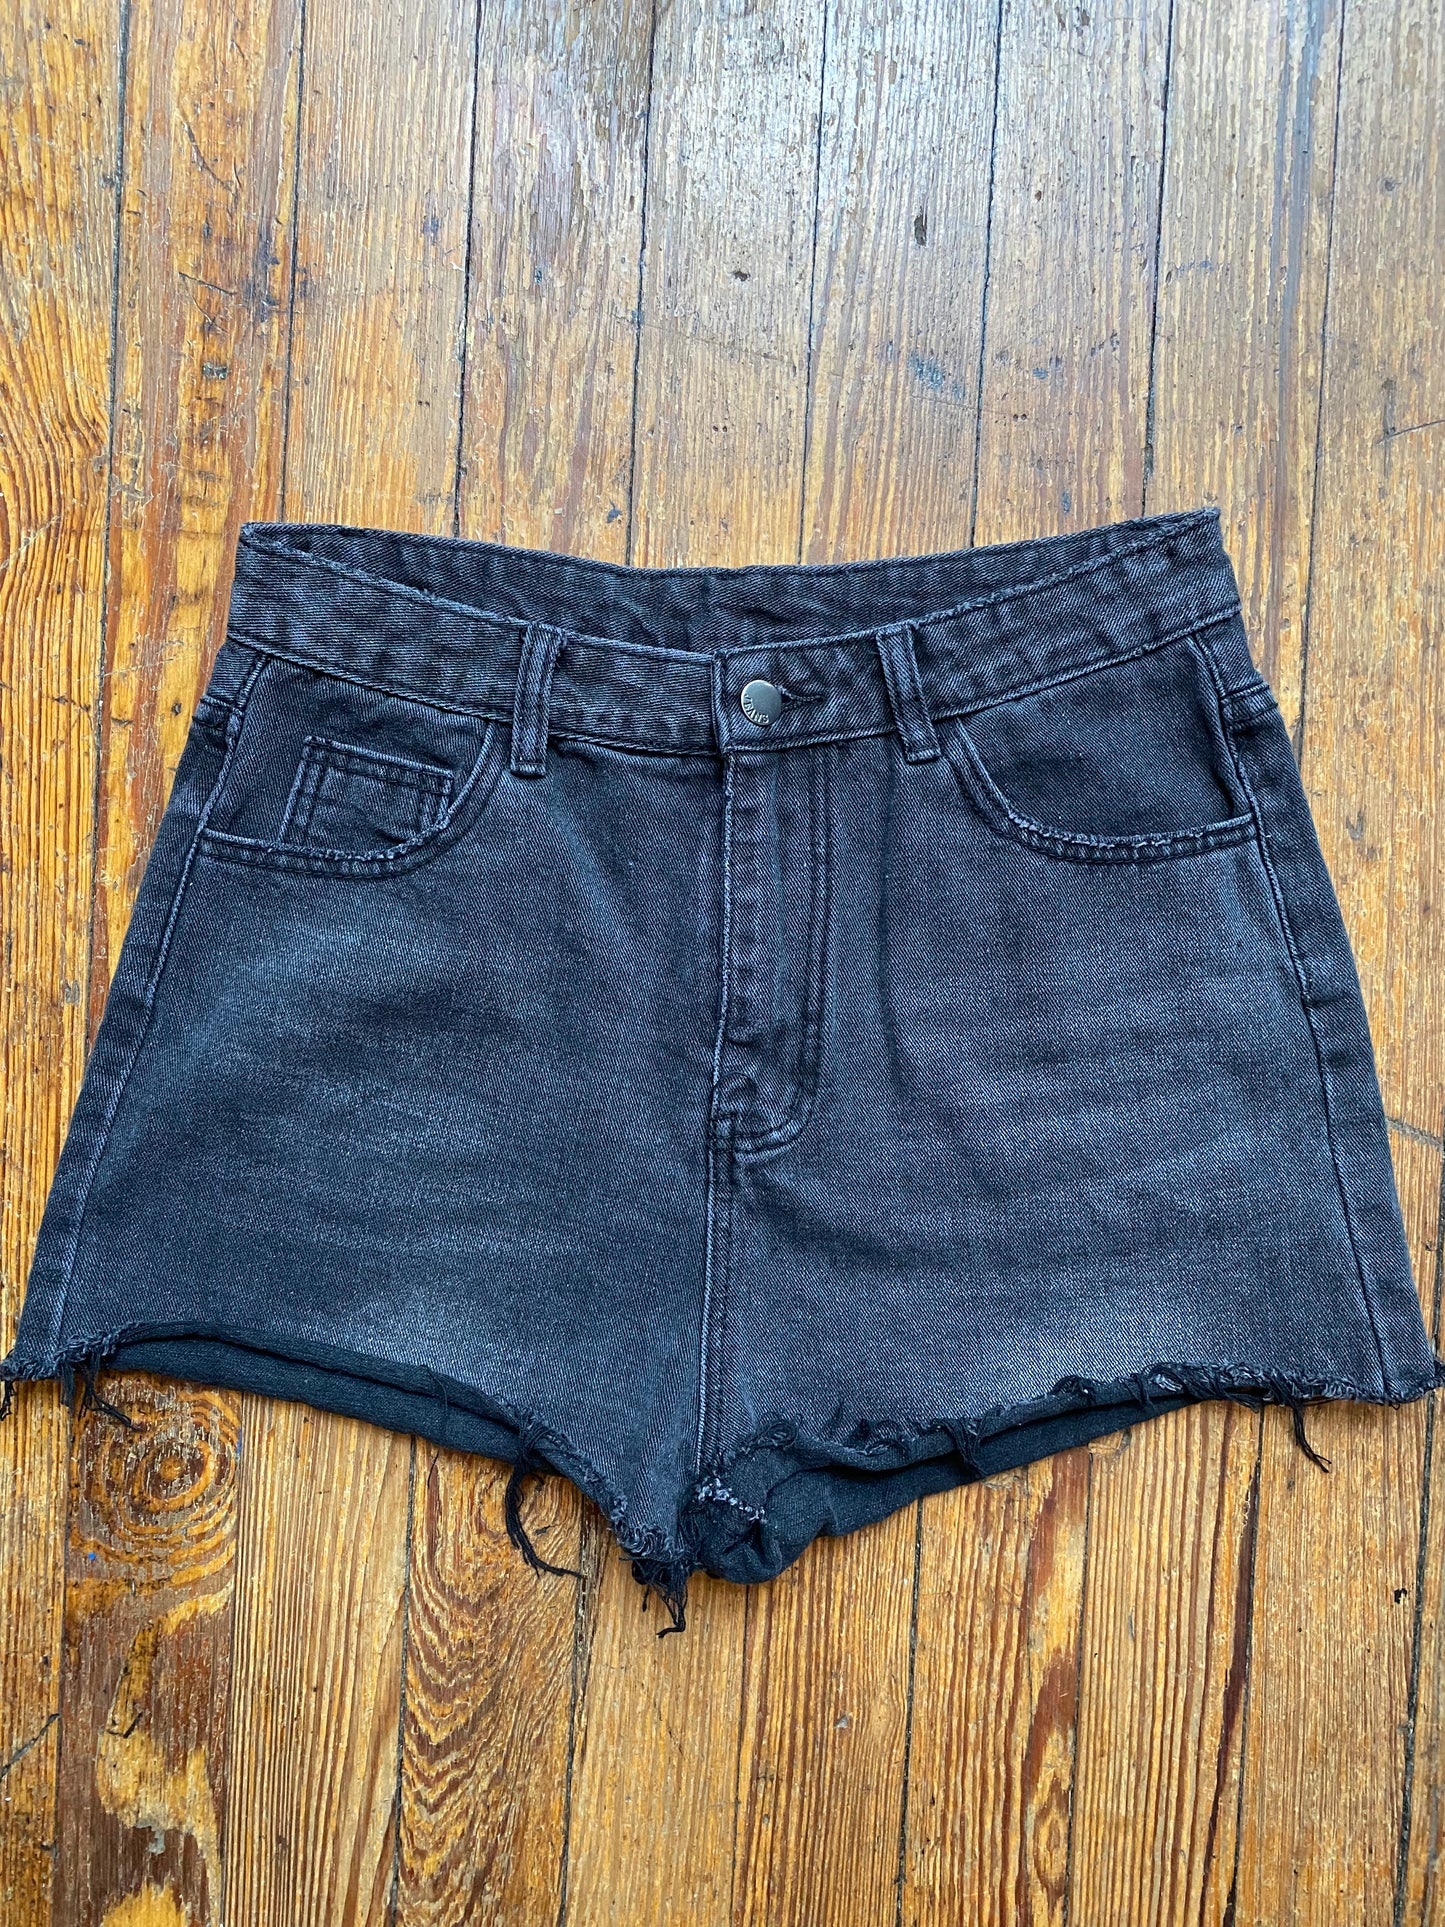 Jeans Brand Black Denim Shorts